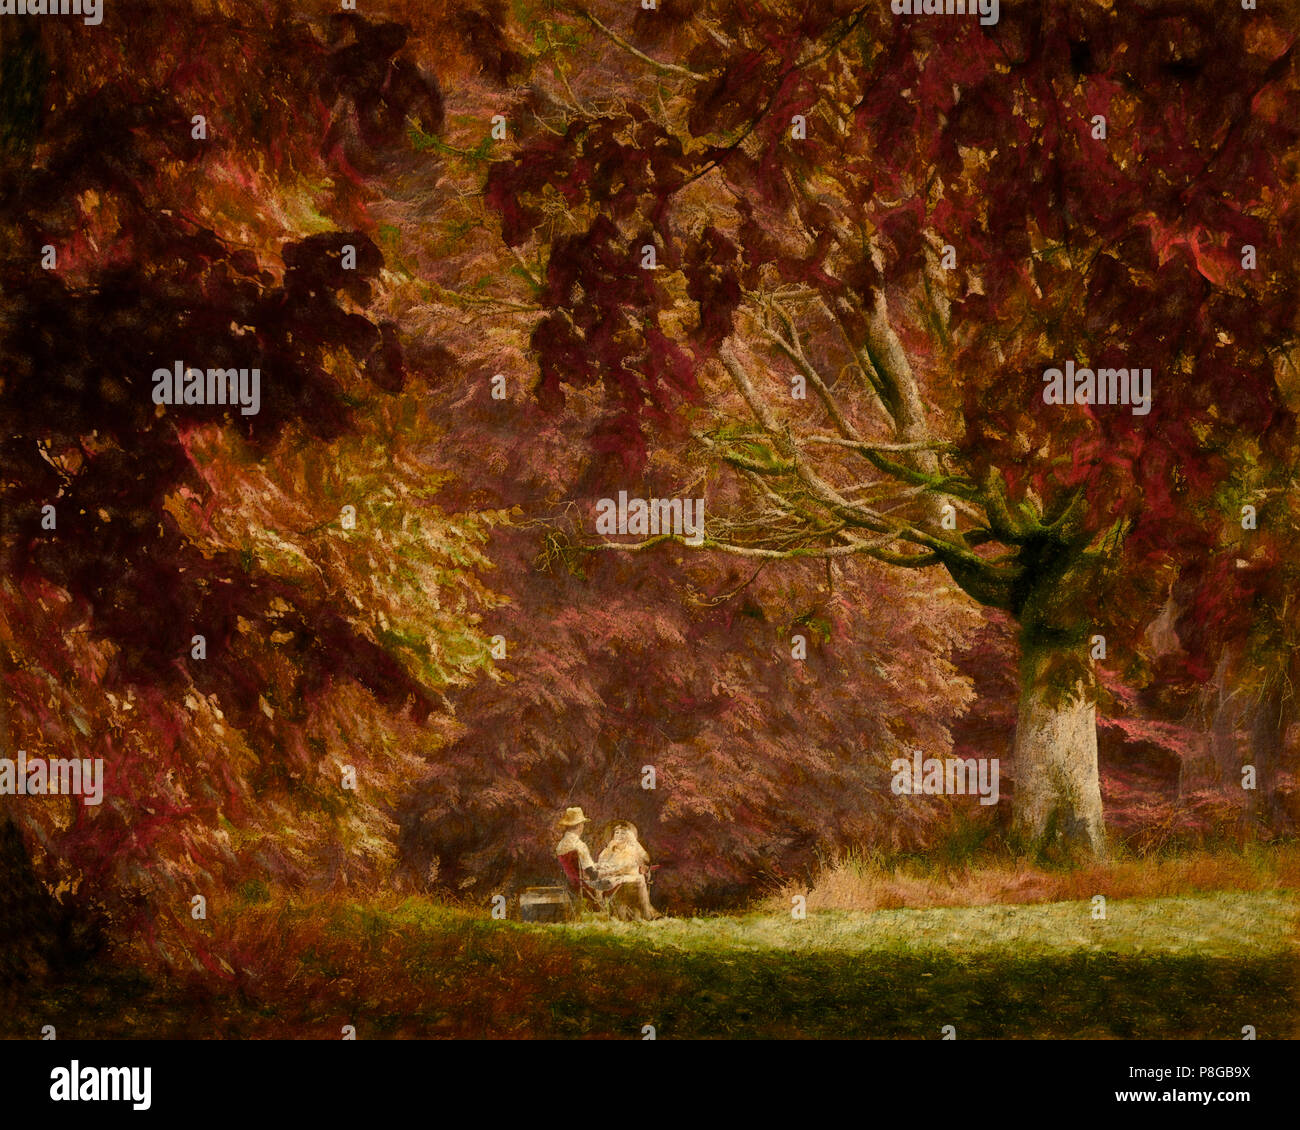 DIGITAL FINE ART: Autumnal Scene in the Park Stock Photo